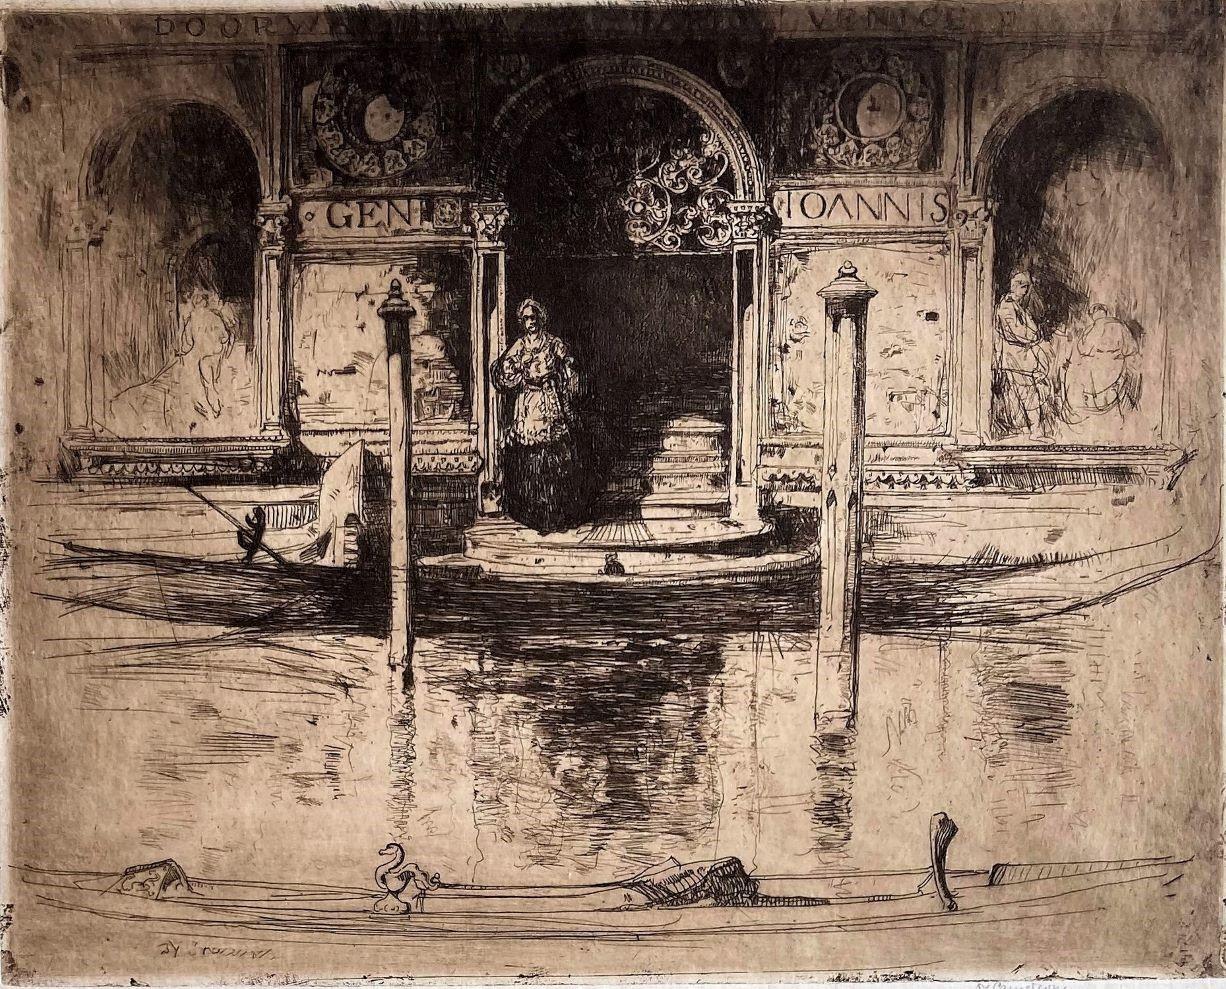 Sir David Young Cameron, R.A. Figurative Print - The Palace Doorway (Palace of Joannis Darius)